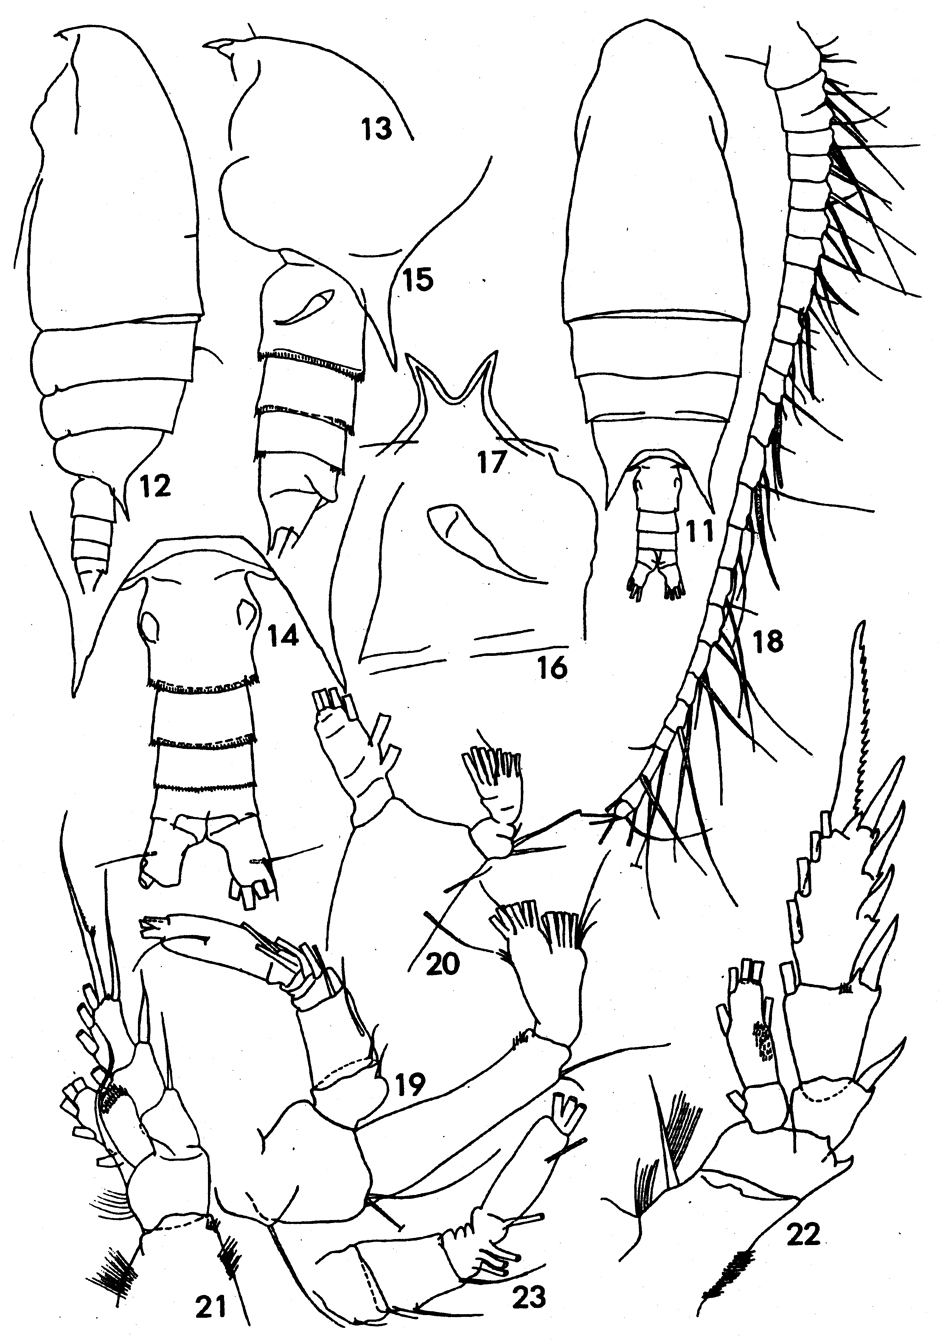 Espce Bradyidius subarmatus - Planche 1 de figures morphologiques